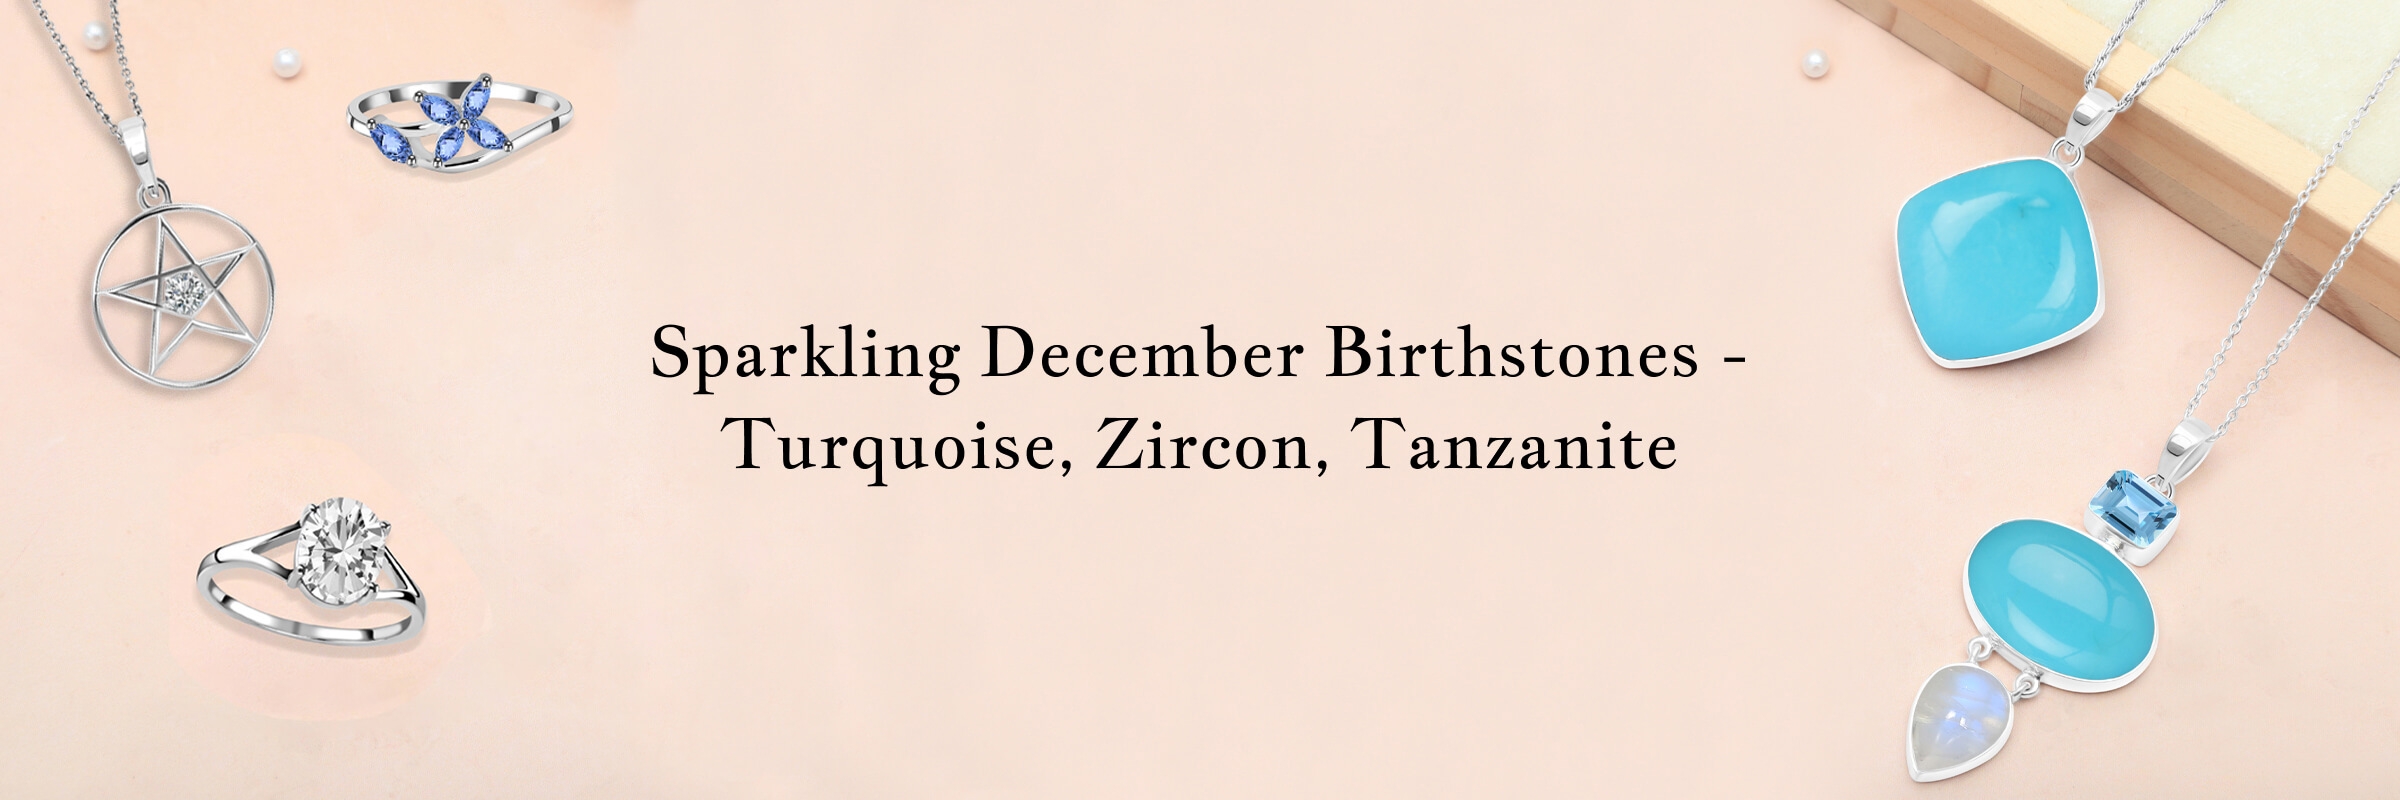 December Birthstones Turquoise, Zircon, and Tanzanite